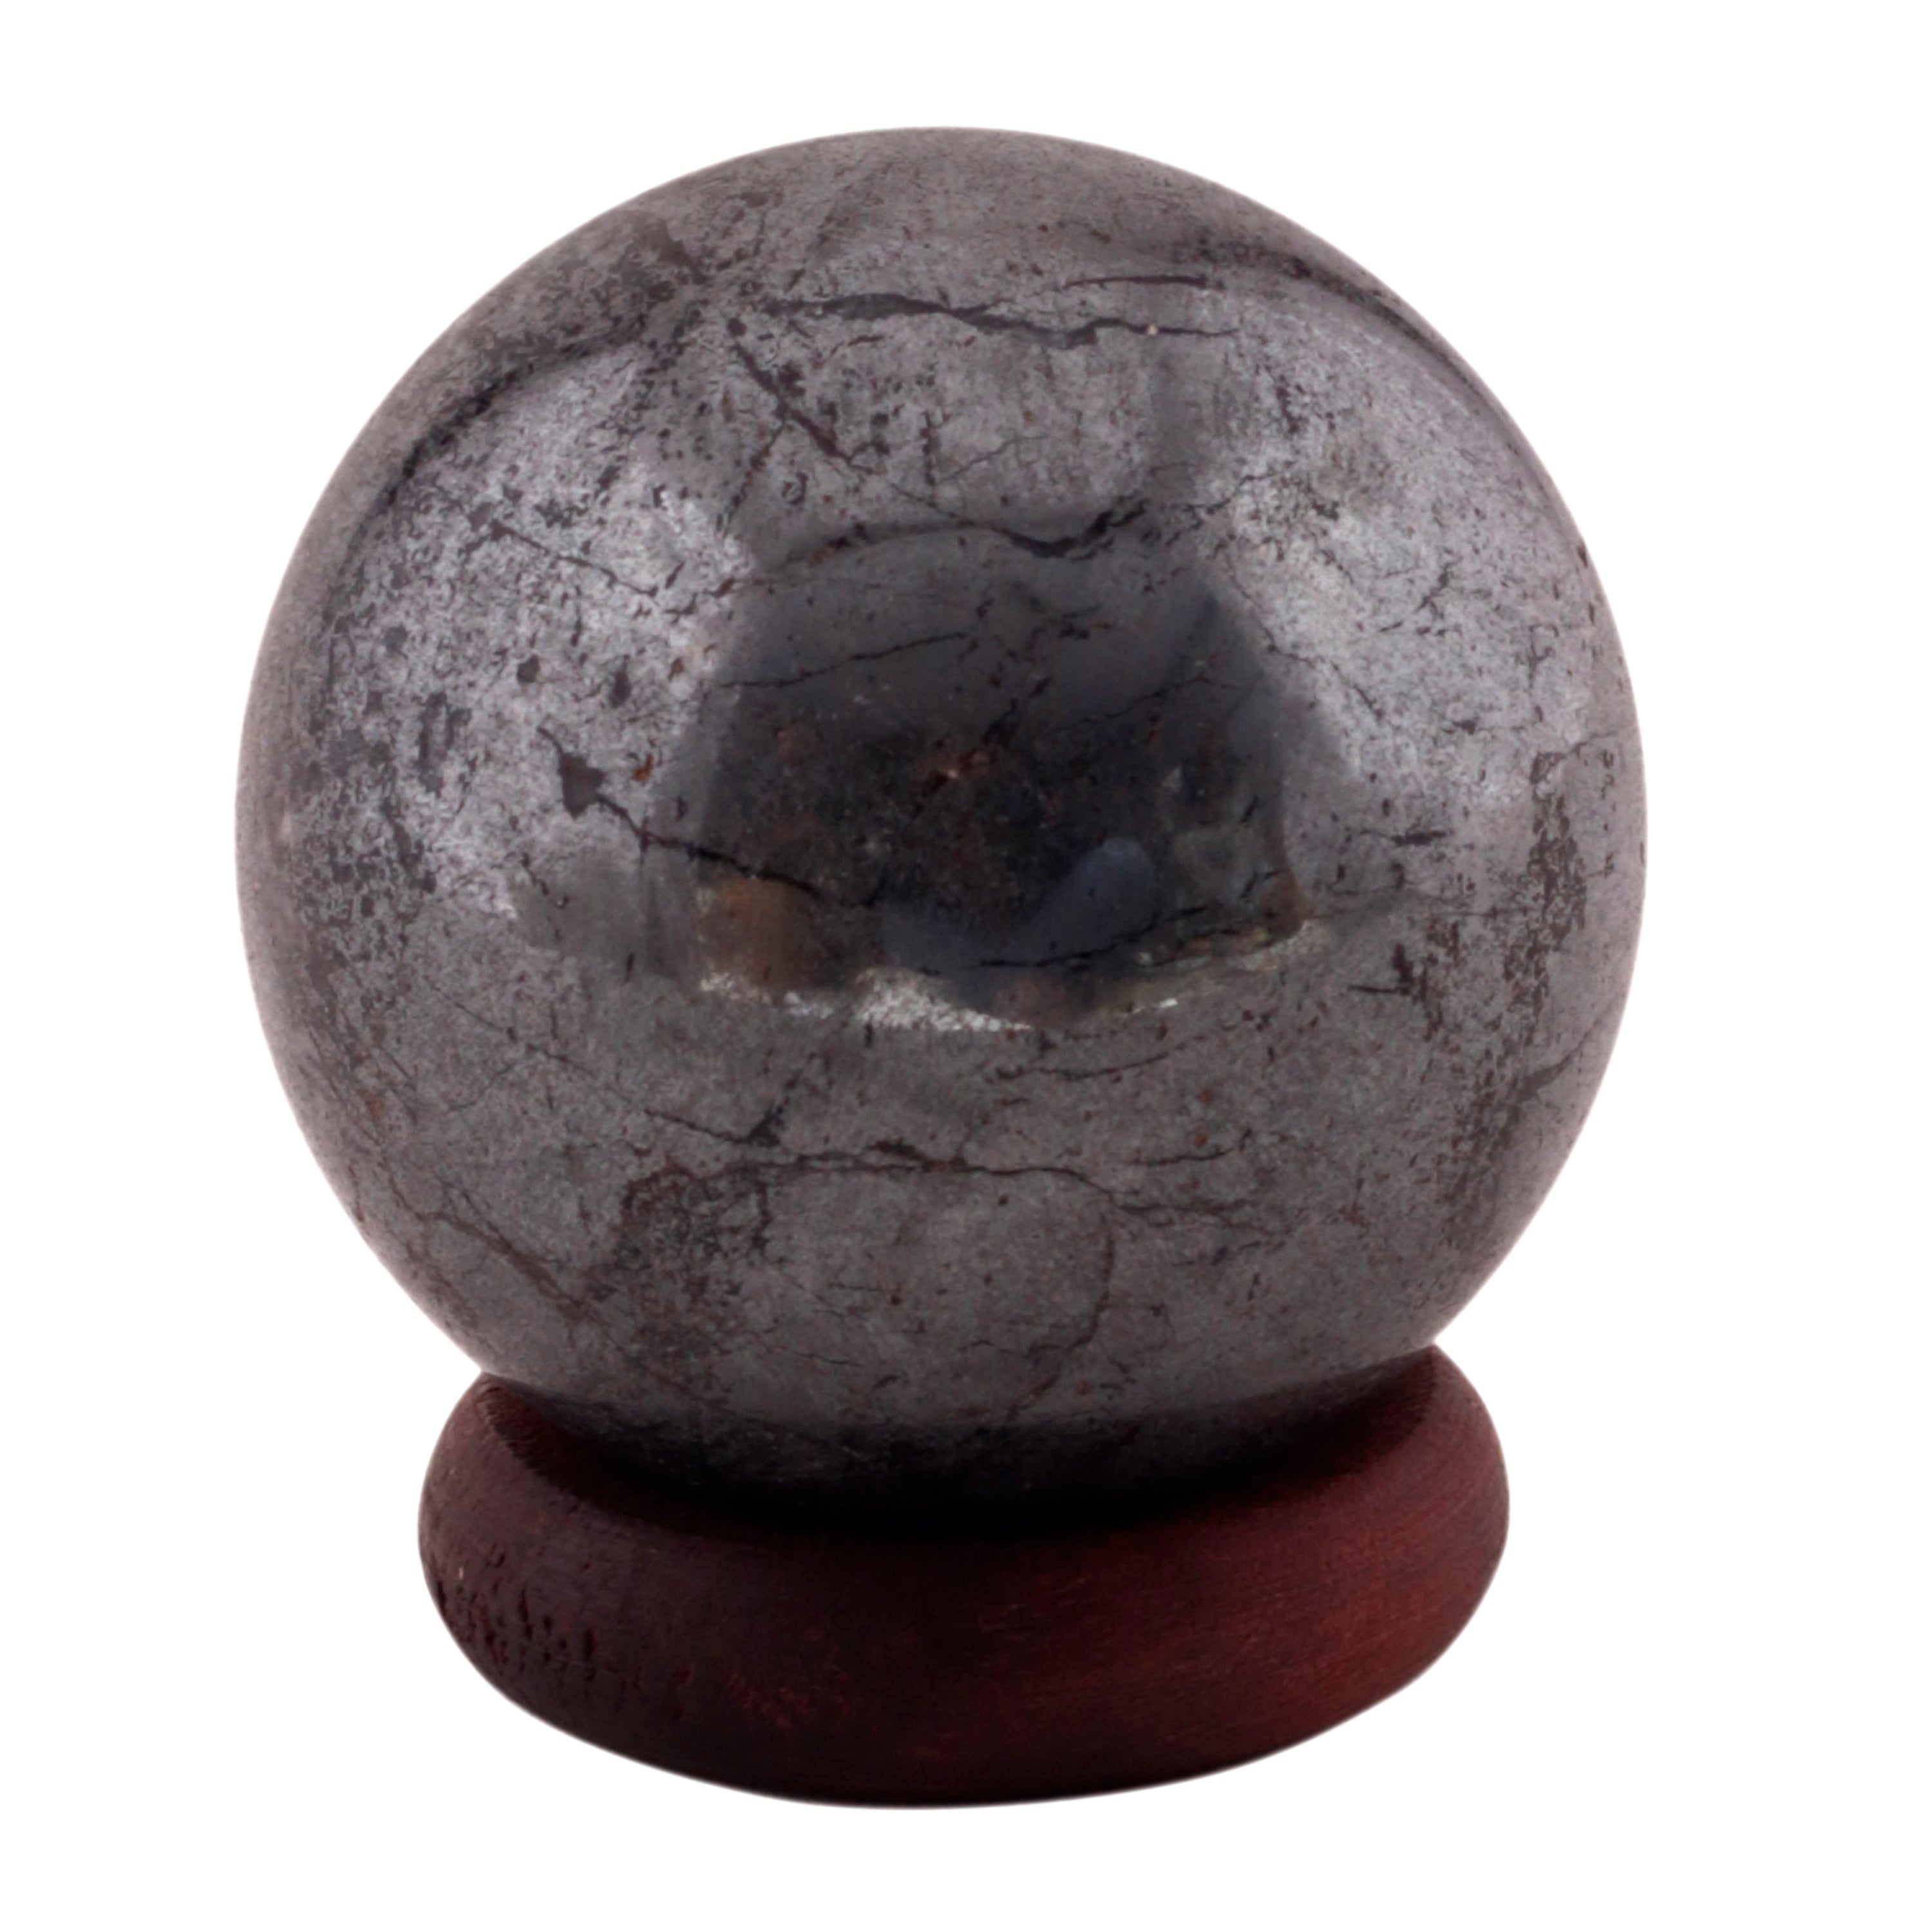 Healing Crystals - Hematite Crystal Sphere Ball 1 Kg Lot